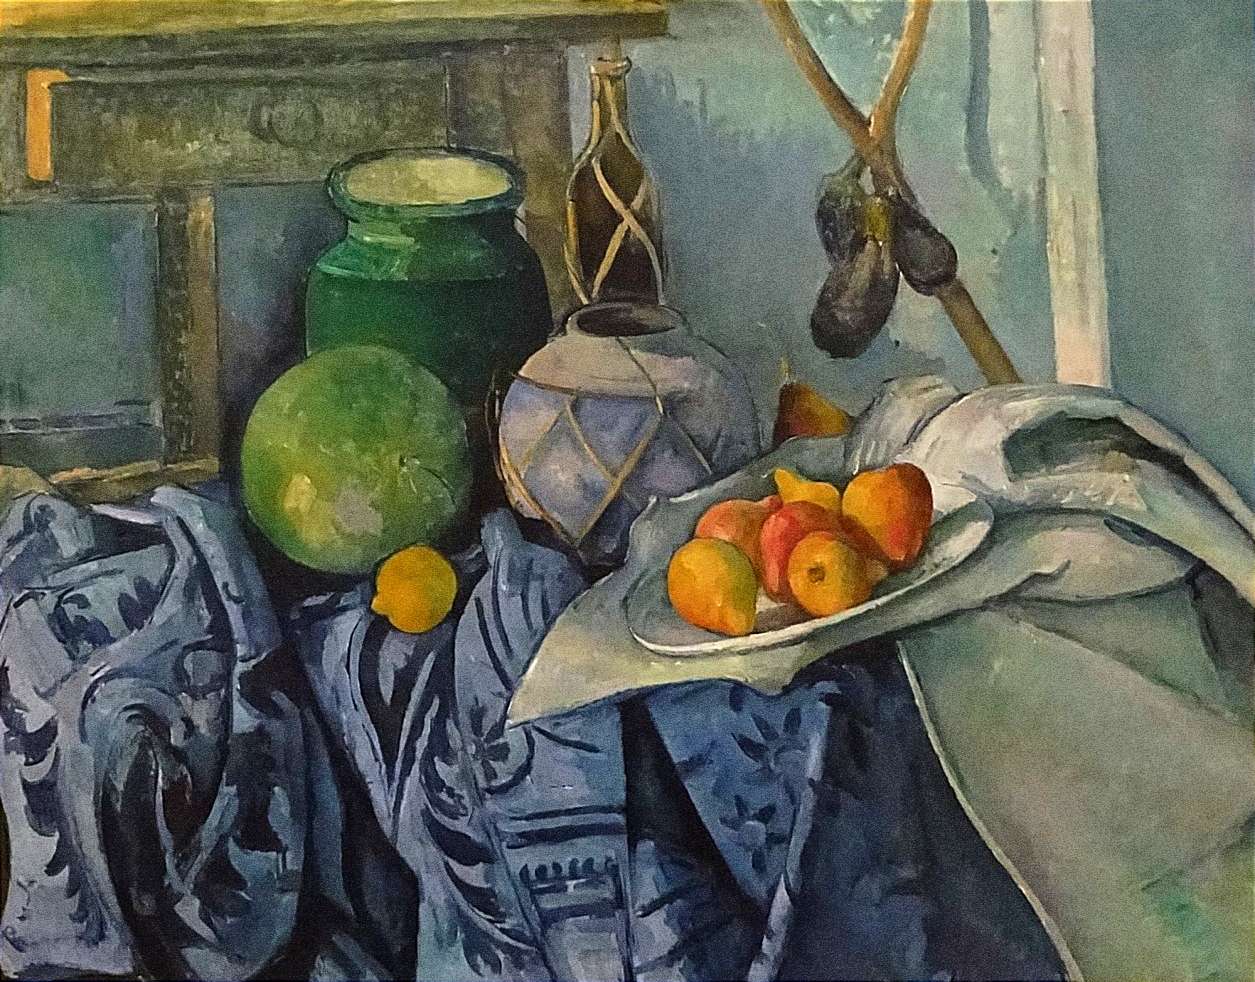 Martwa natura ze słoikiem imbiru i bakłażanami, Cézann puzzle online